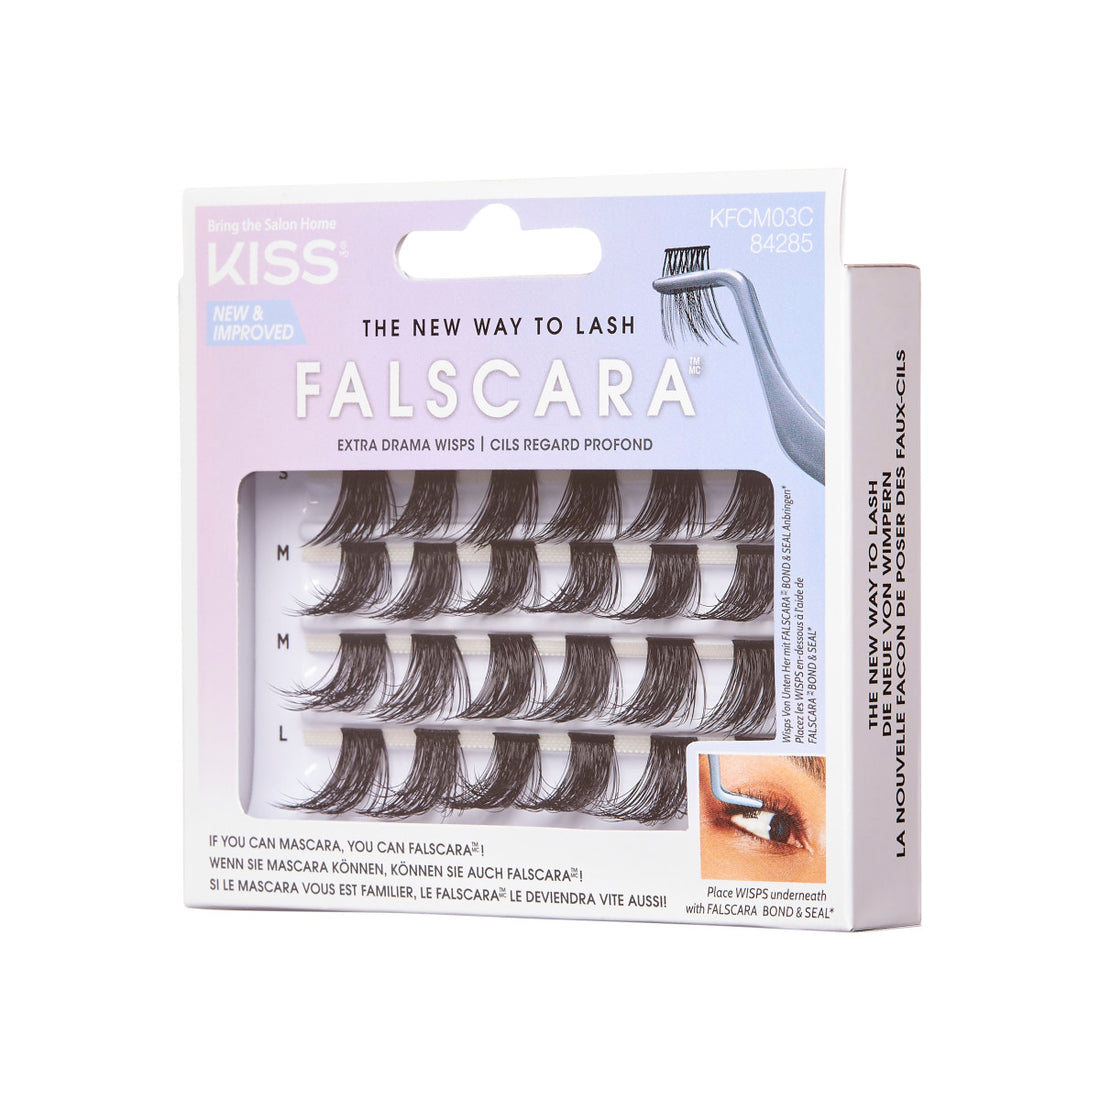 KISS FALSCARA Collection DIY Eyelash Extensions Multi Pack, Extra Drama Wisps, 24 Ct.